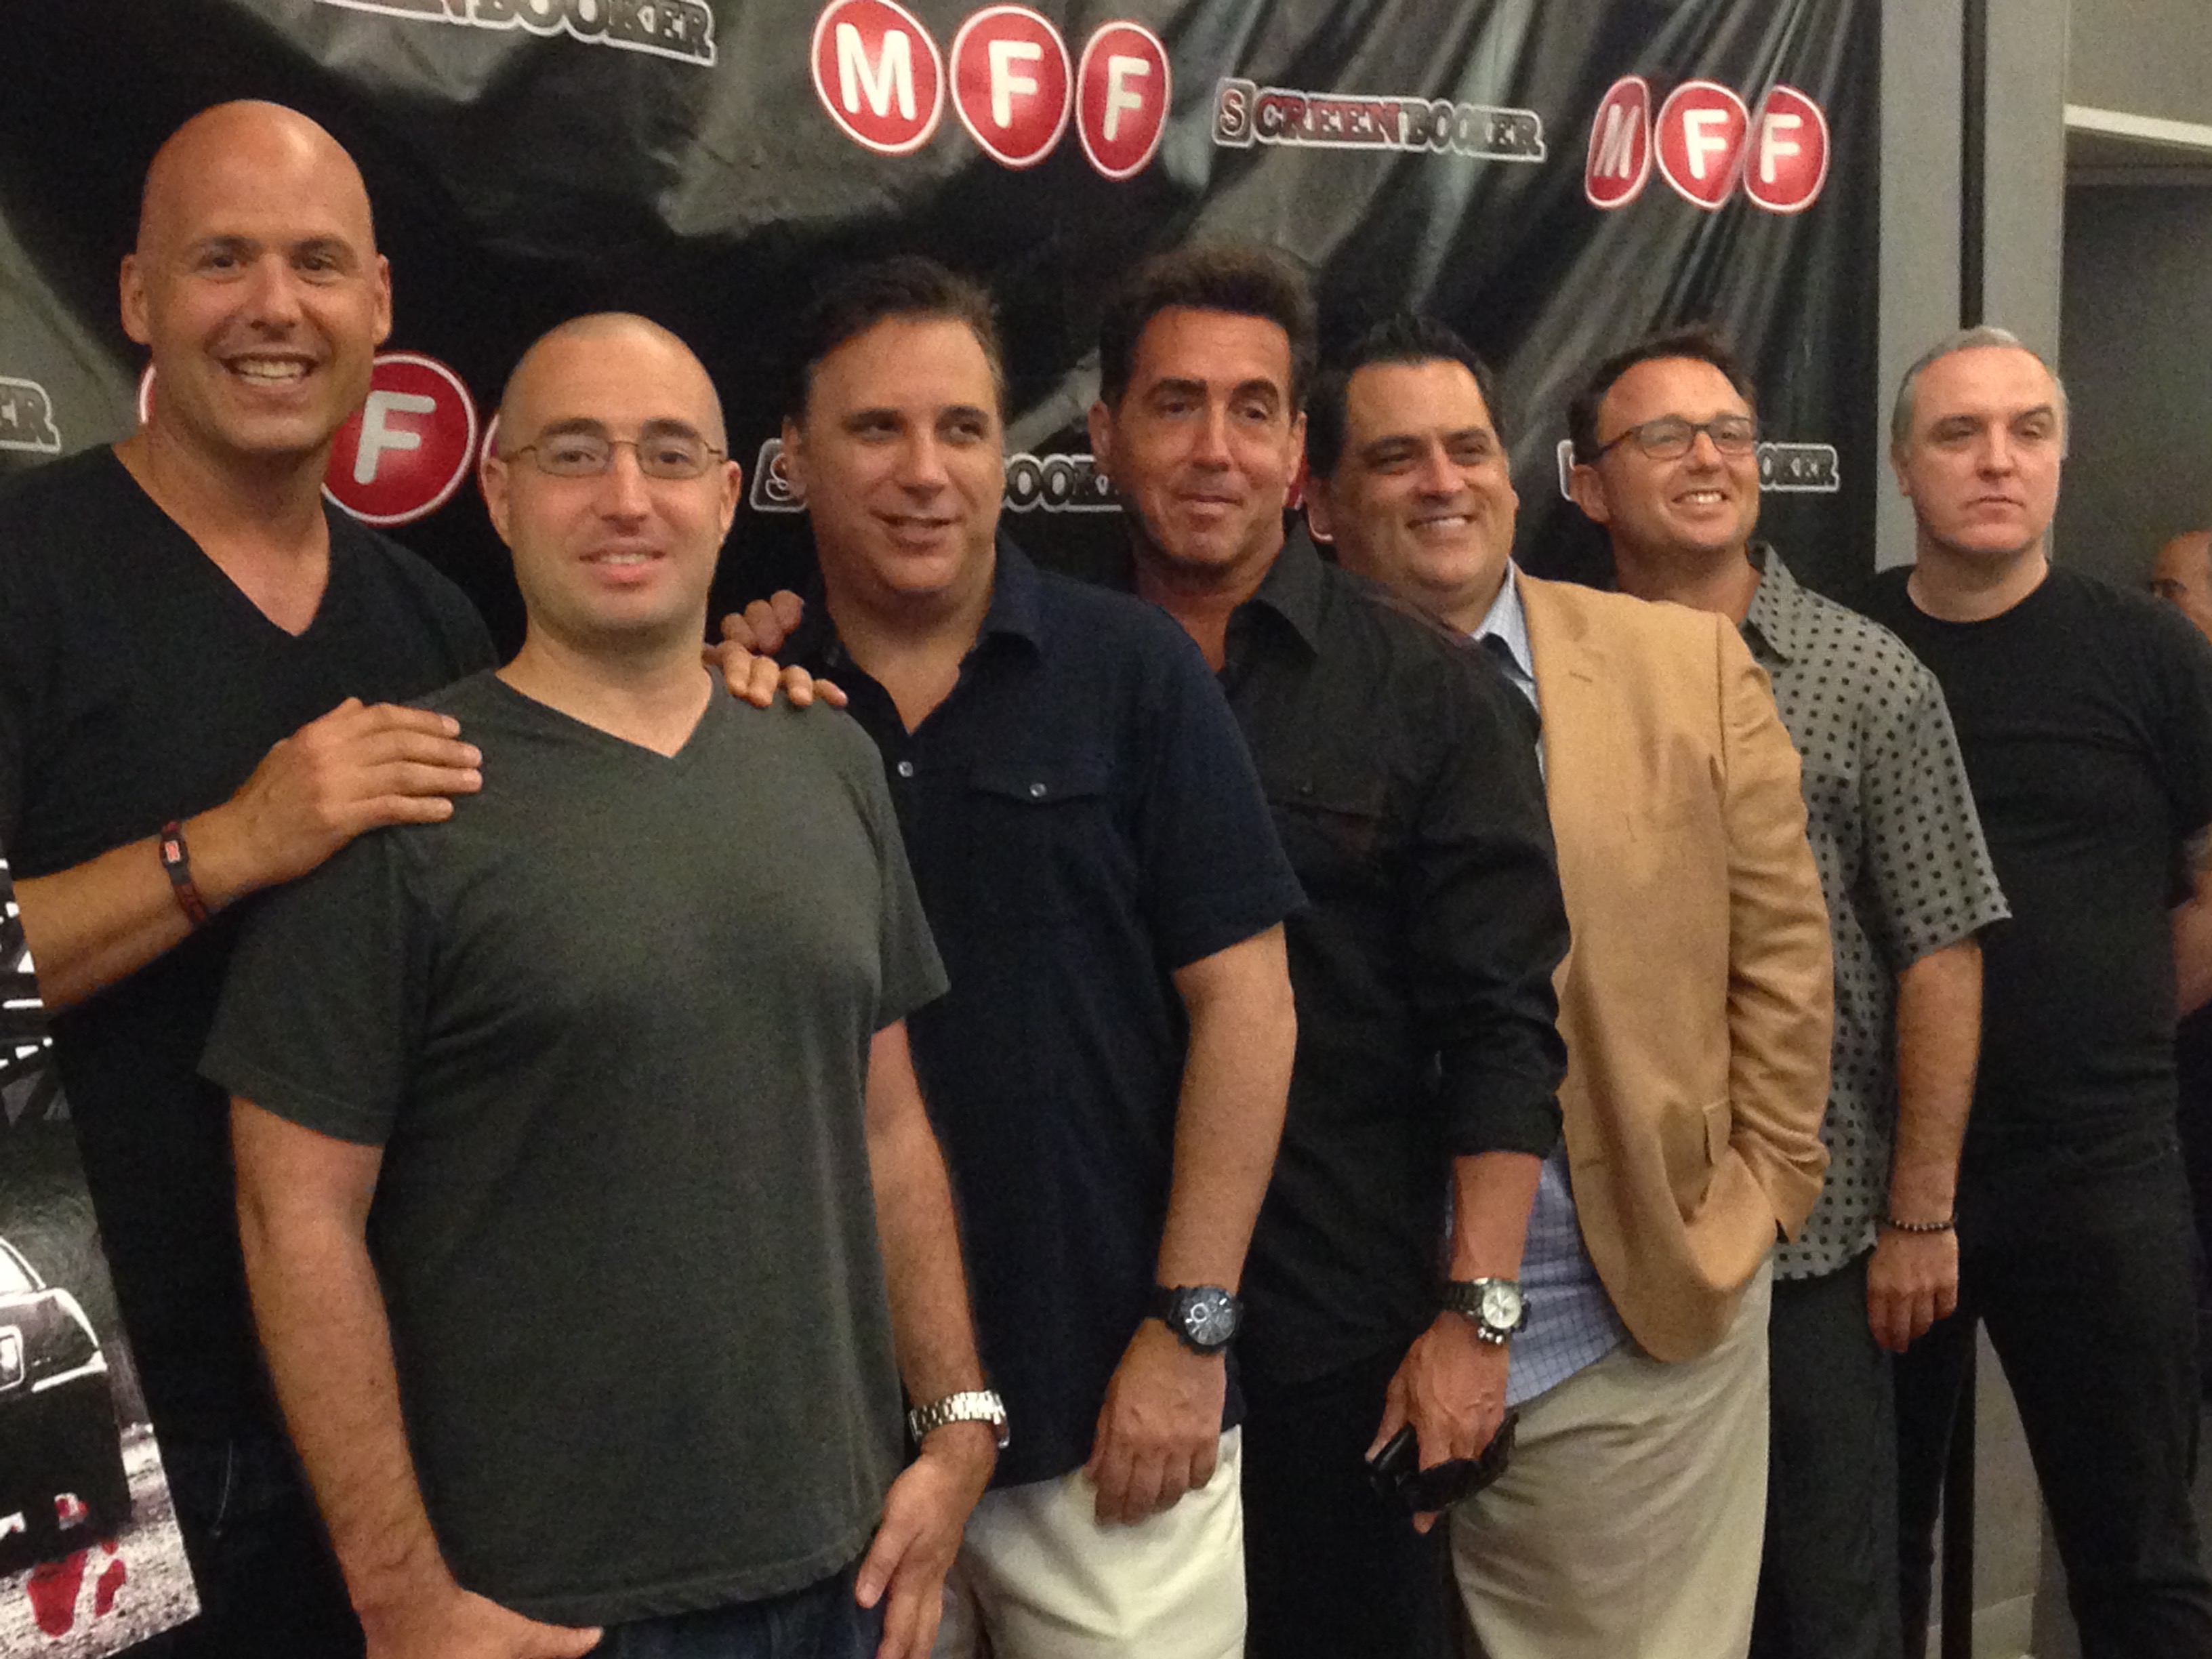 Joe Basile, Mark Bernardi, Lou Martini, Jr., Anthony Mangano, Stephen Badalamenti at the Manhattan Film Festival, WEST END.